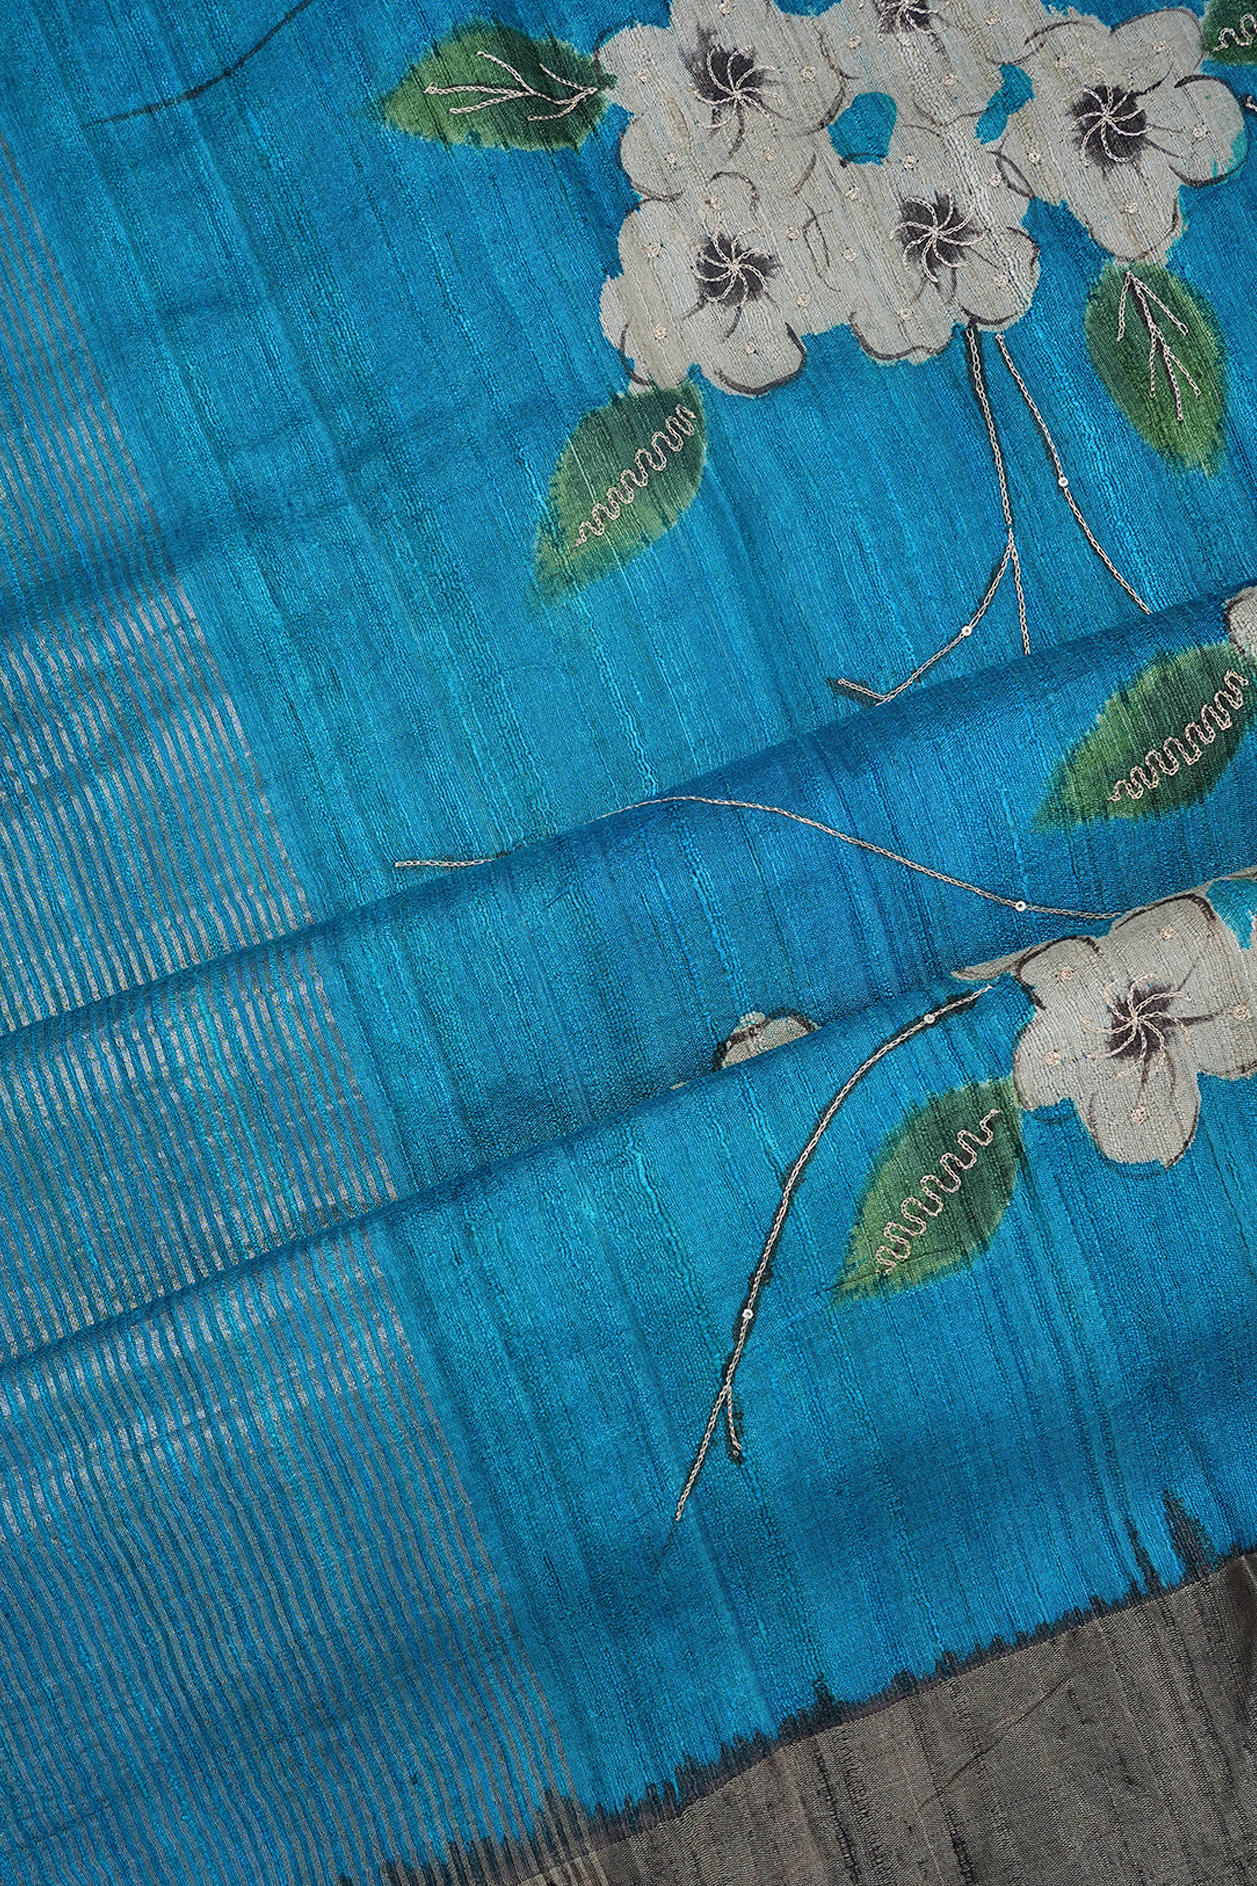 Embroidered Design Peacock Blue Tussar Silk Saree